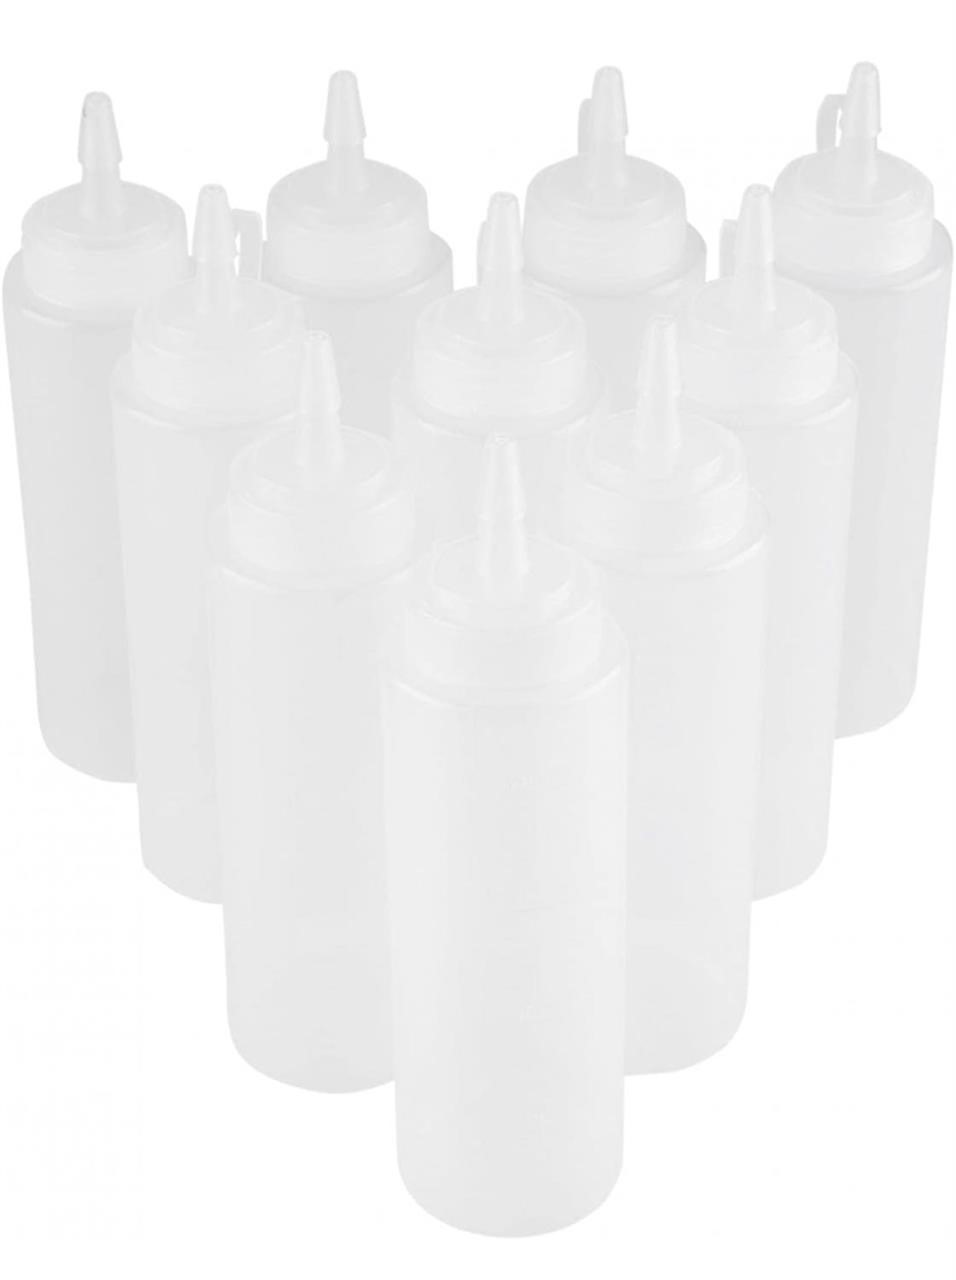 (24 oz) 8-Pack Condiment Squeeze Bottles